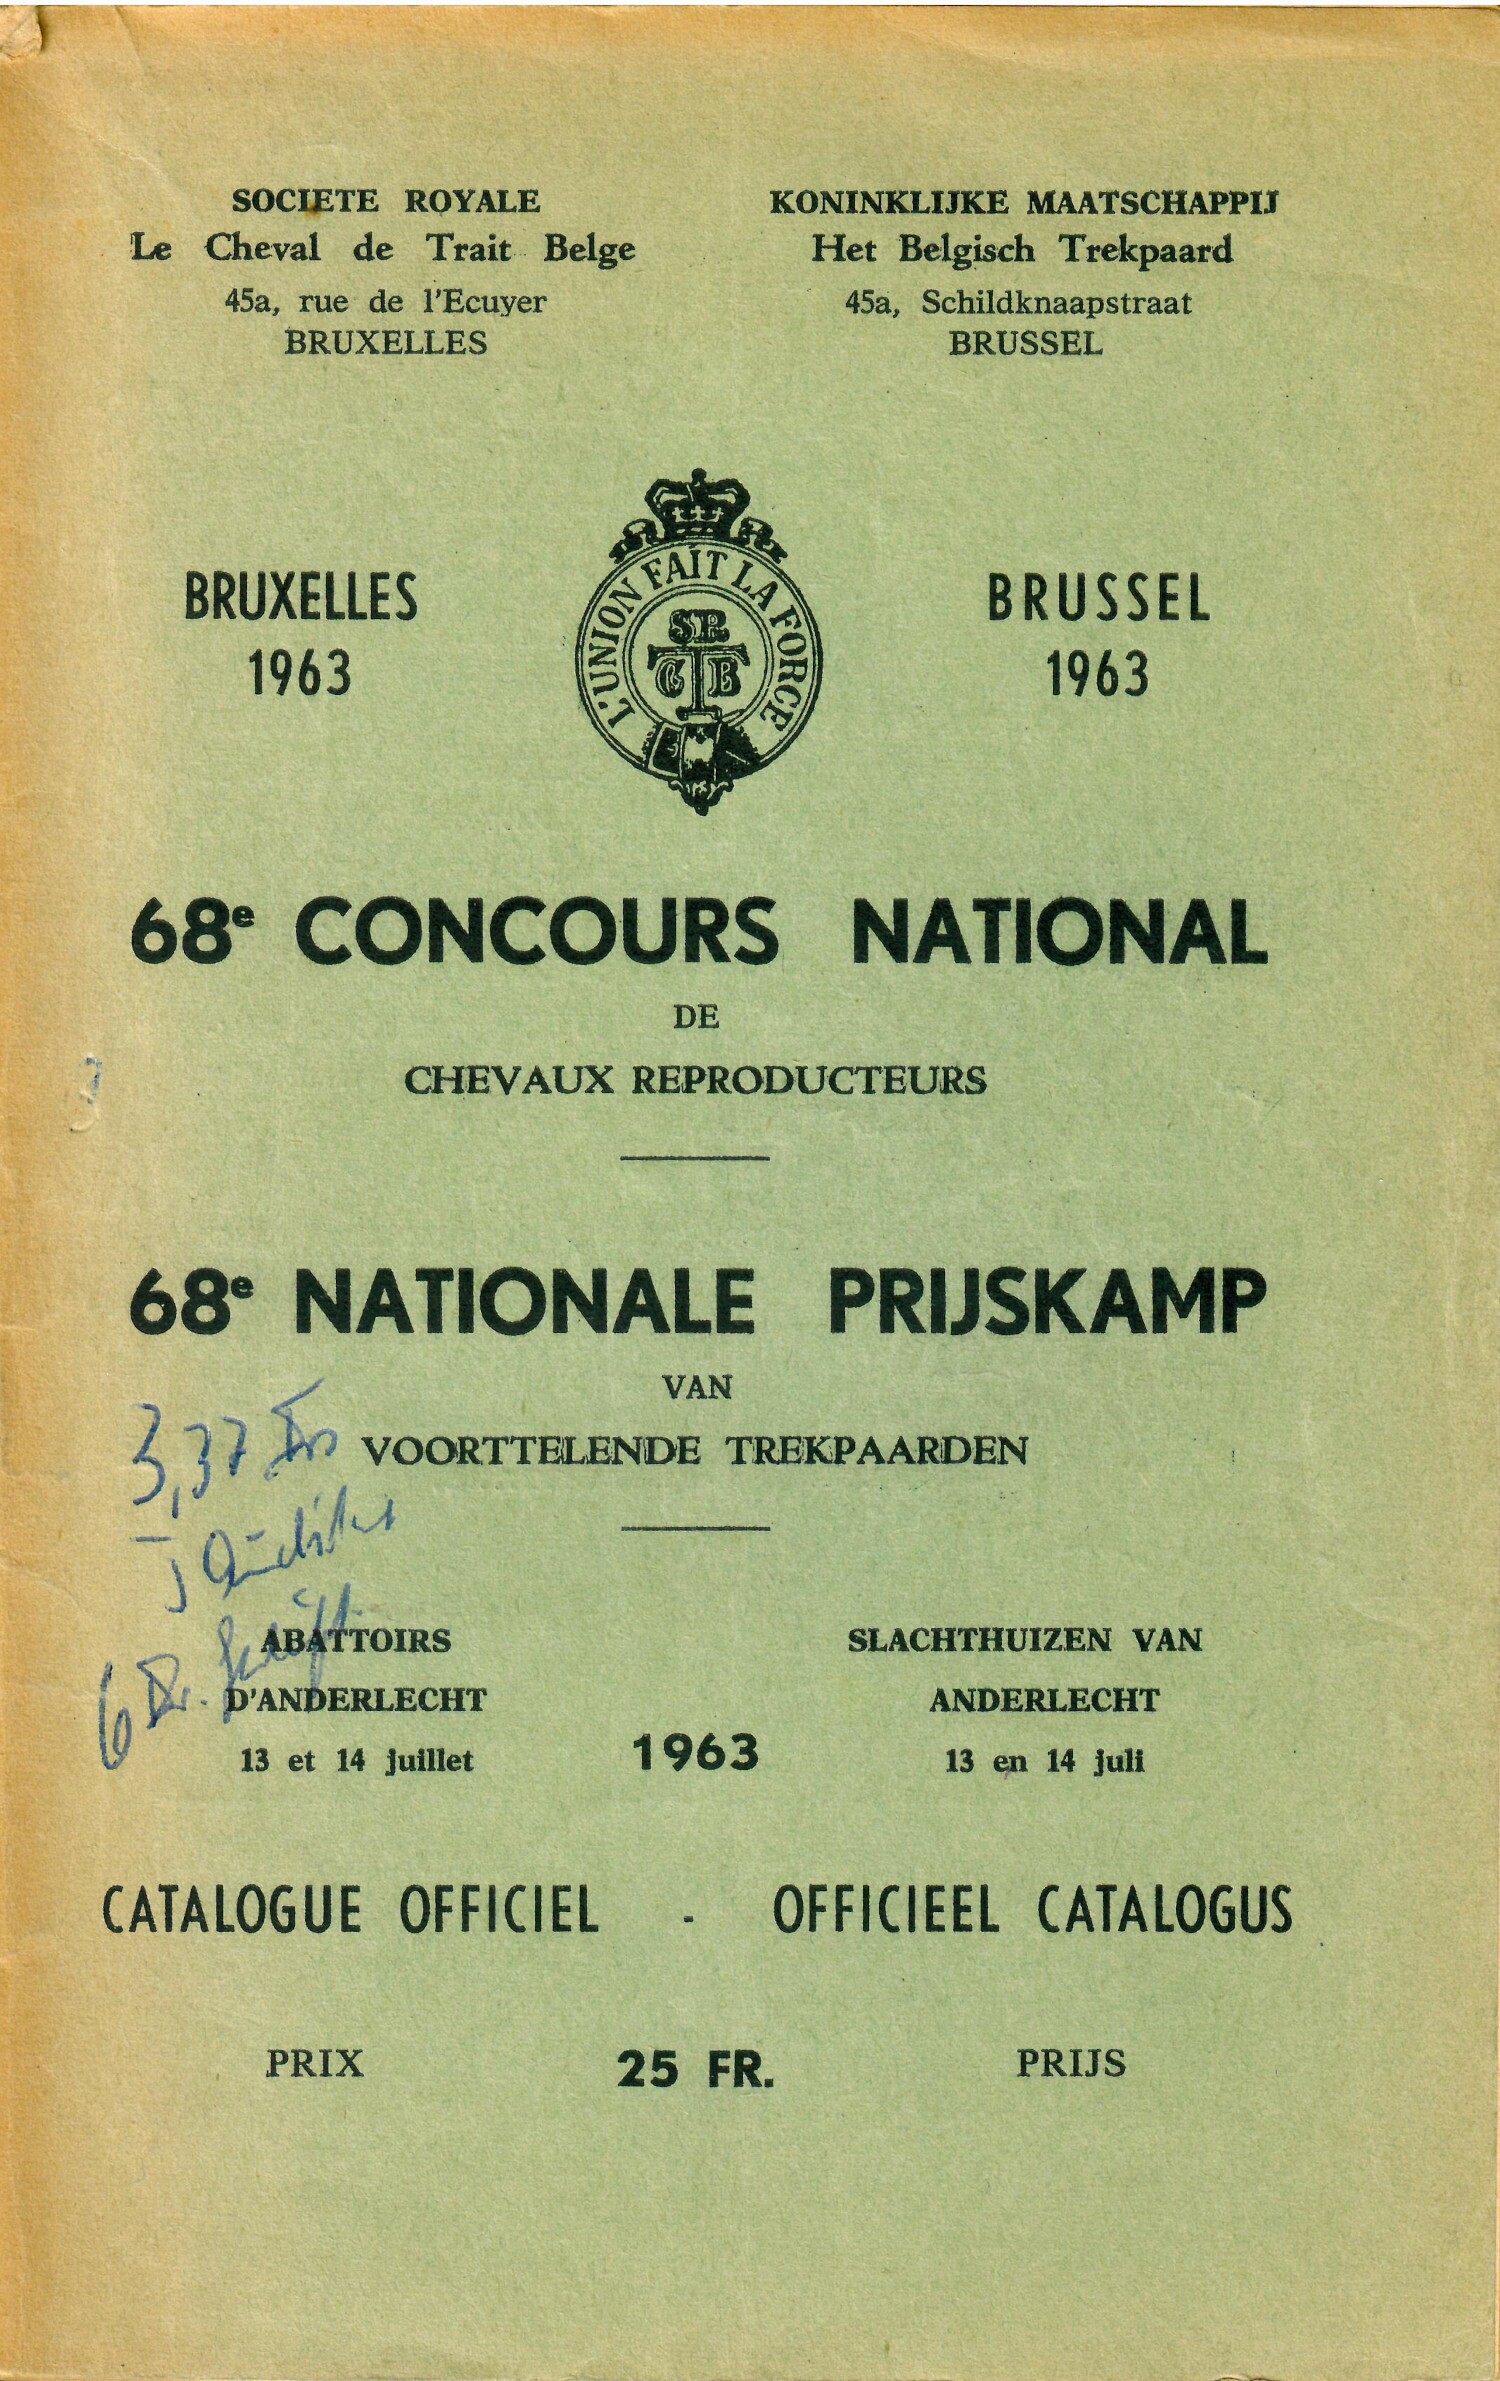 Les Cheval de trait belge et adennes 1963 (Herausgeber RR-R)